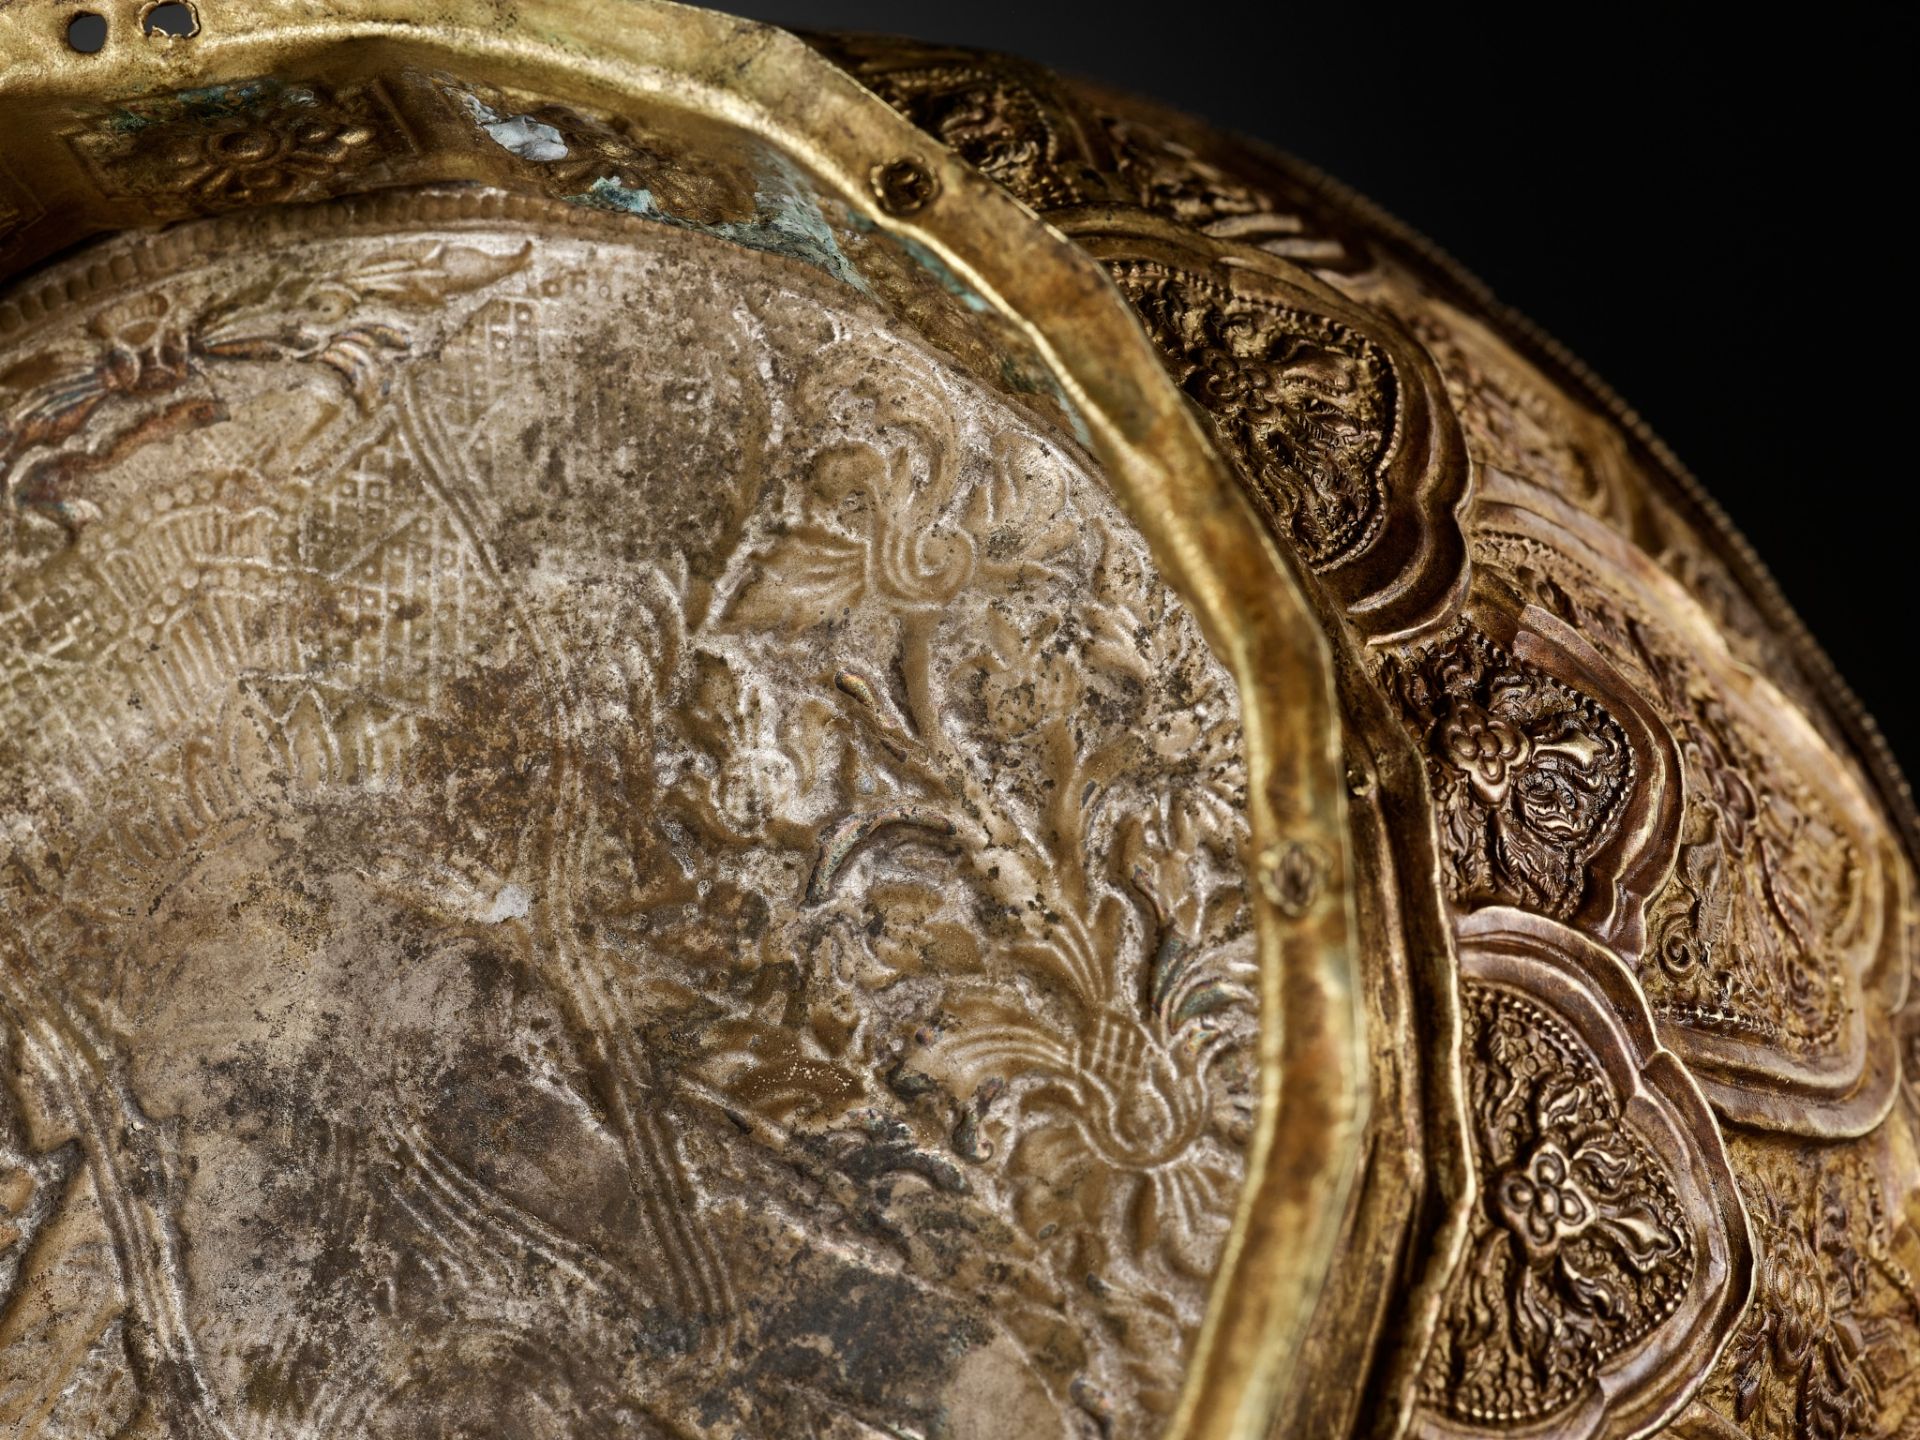 A SILVER-INLAID GOLD REPOUSSÉ BOWL DEPICTING GARUDA, VIETNAM,FORMER KINGDOMS OF CHAMPA,CIRCA 10TH C. - Image 17 of 18